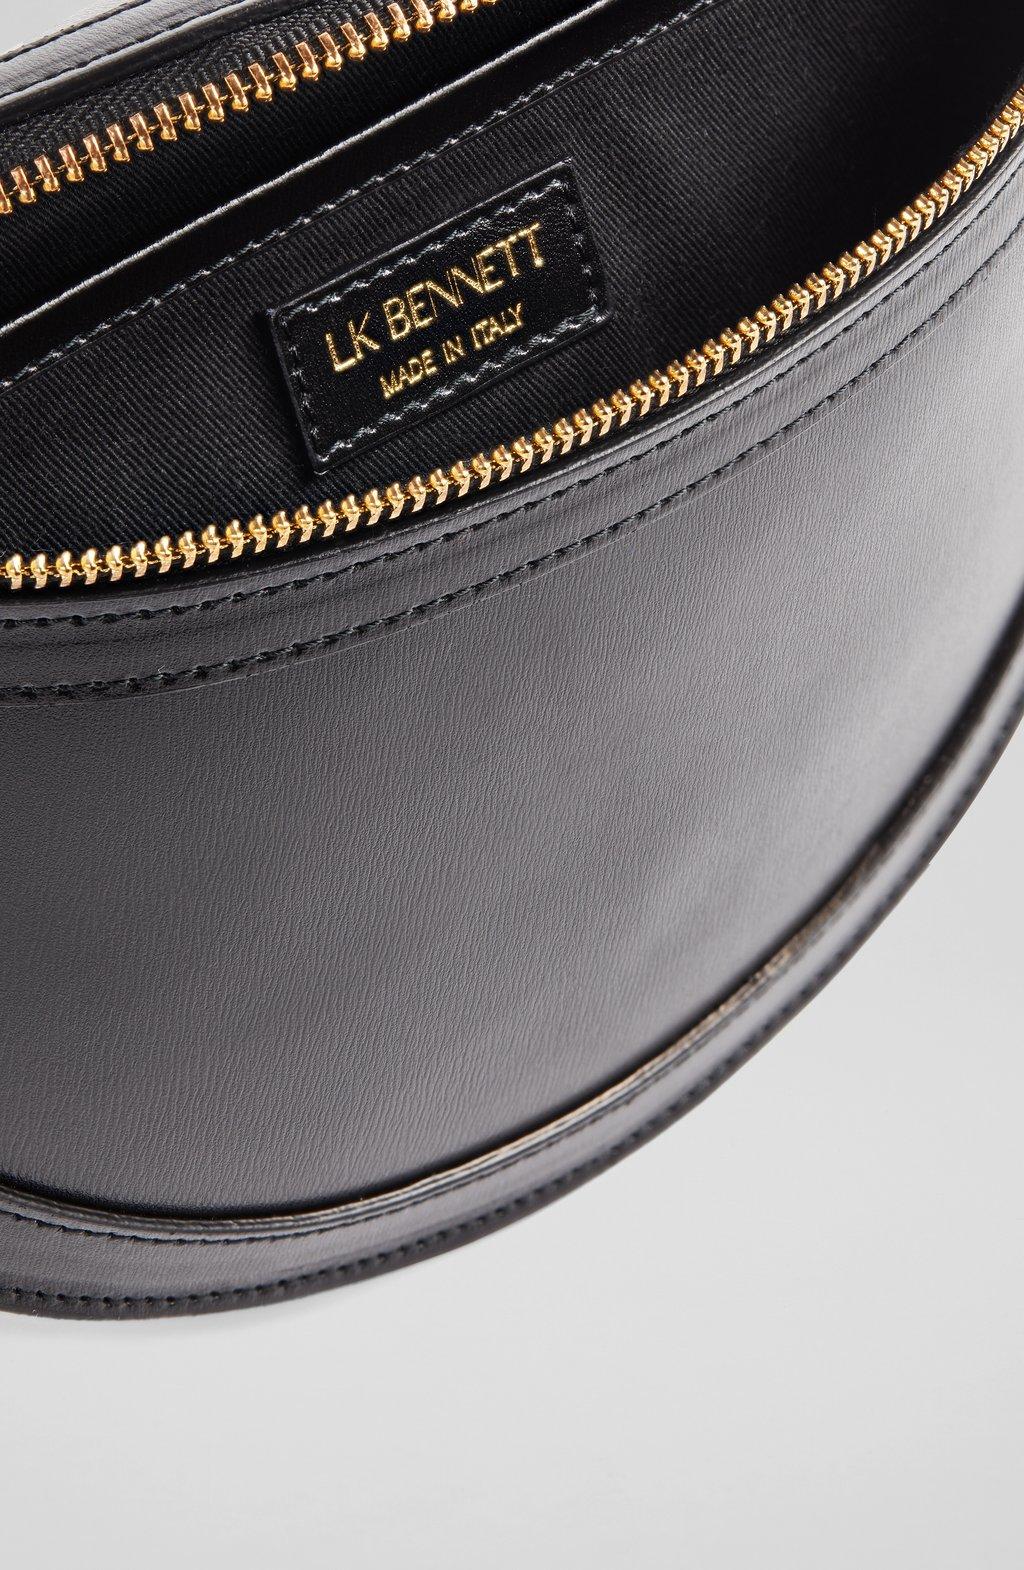 GRETA - The soft leather luxury